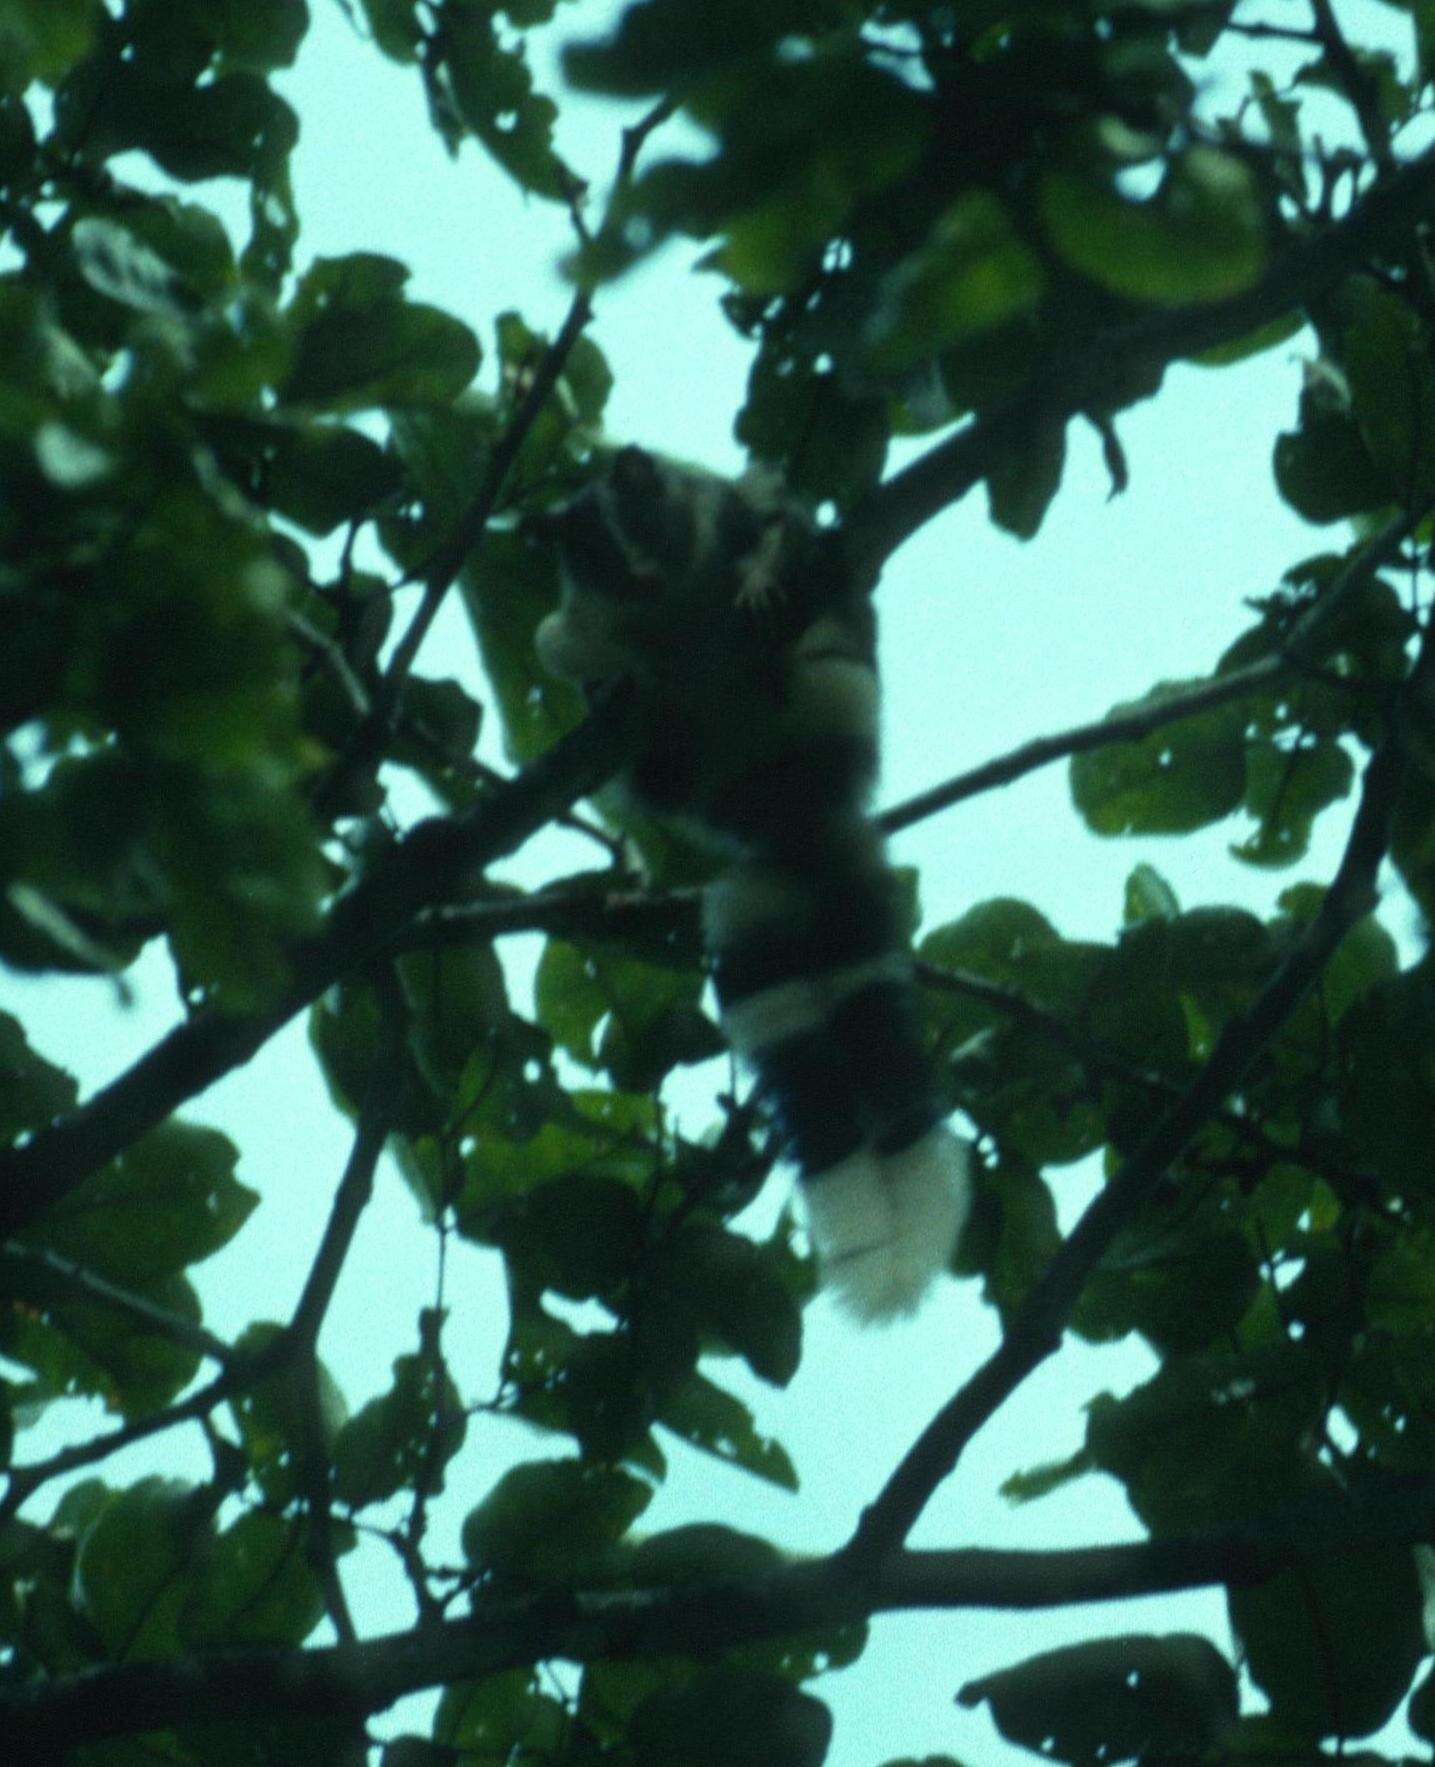 Image of Palawan Flying Squirrel